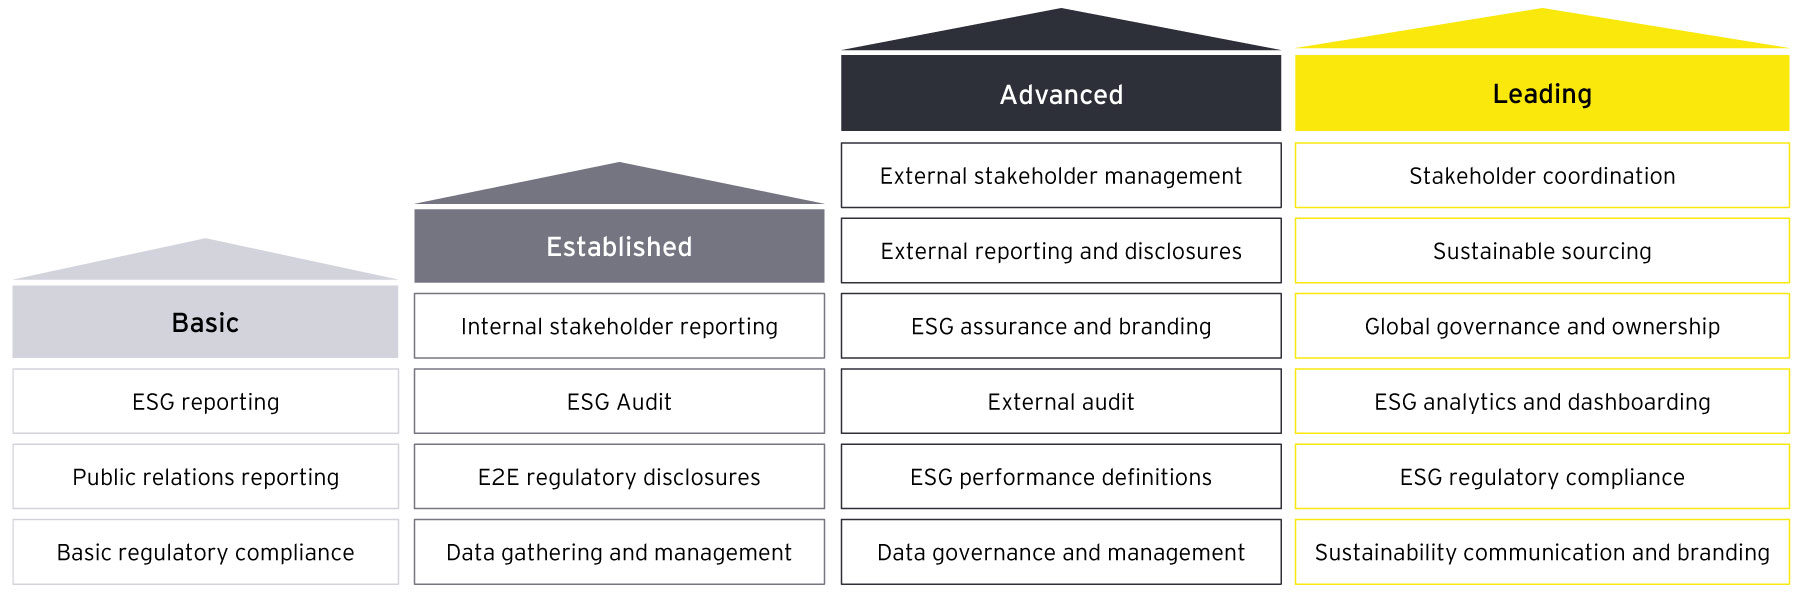 ESG function maturity model